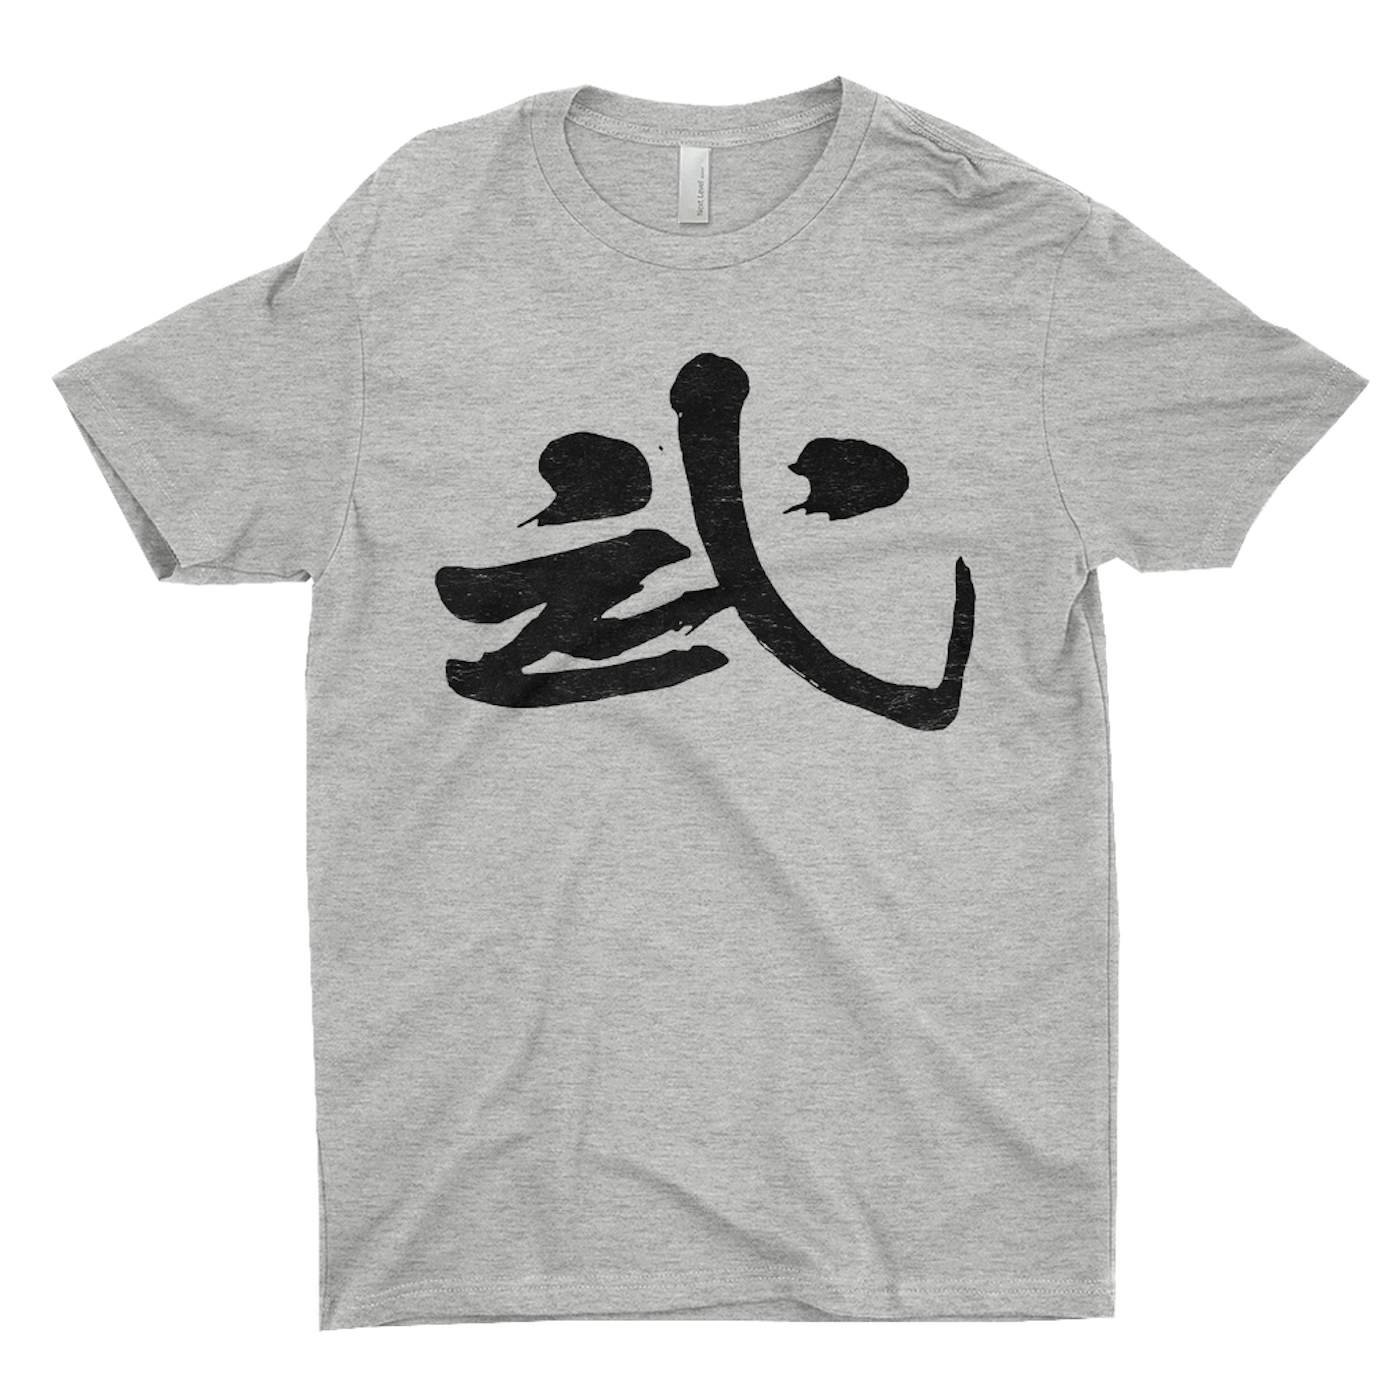 John Lennon T-Shirt | Rock n' Roll Chinese Symbol Design Worn By John Lennon Shirt